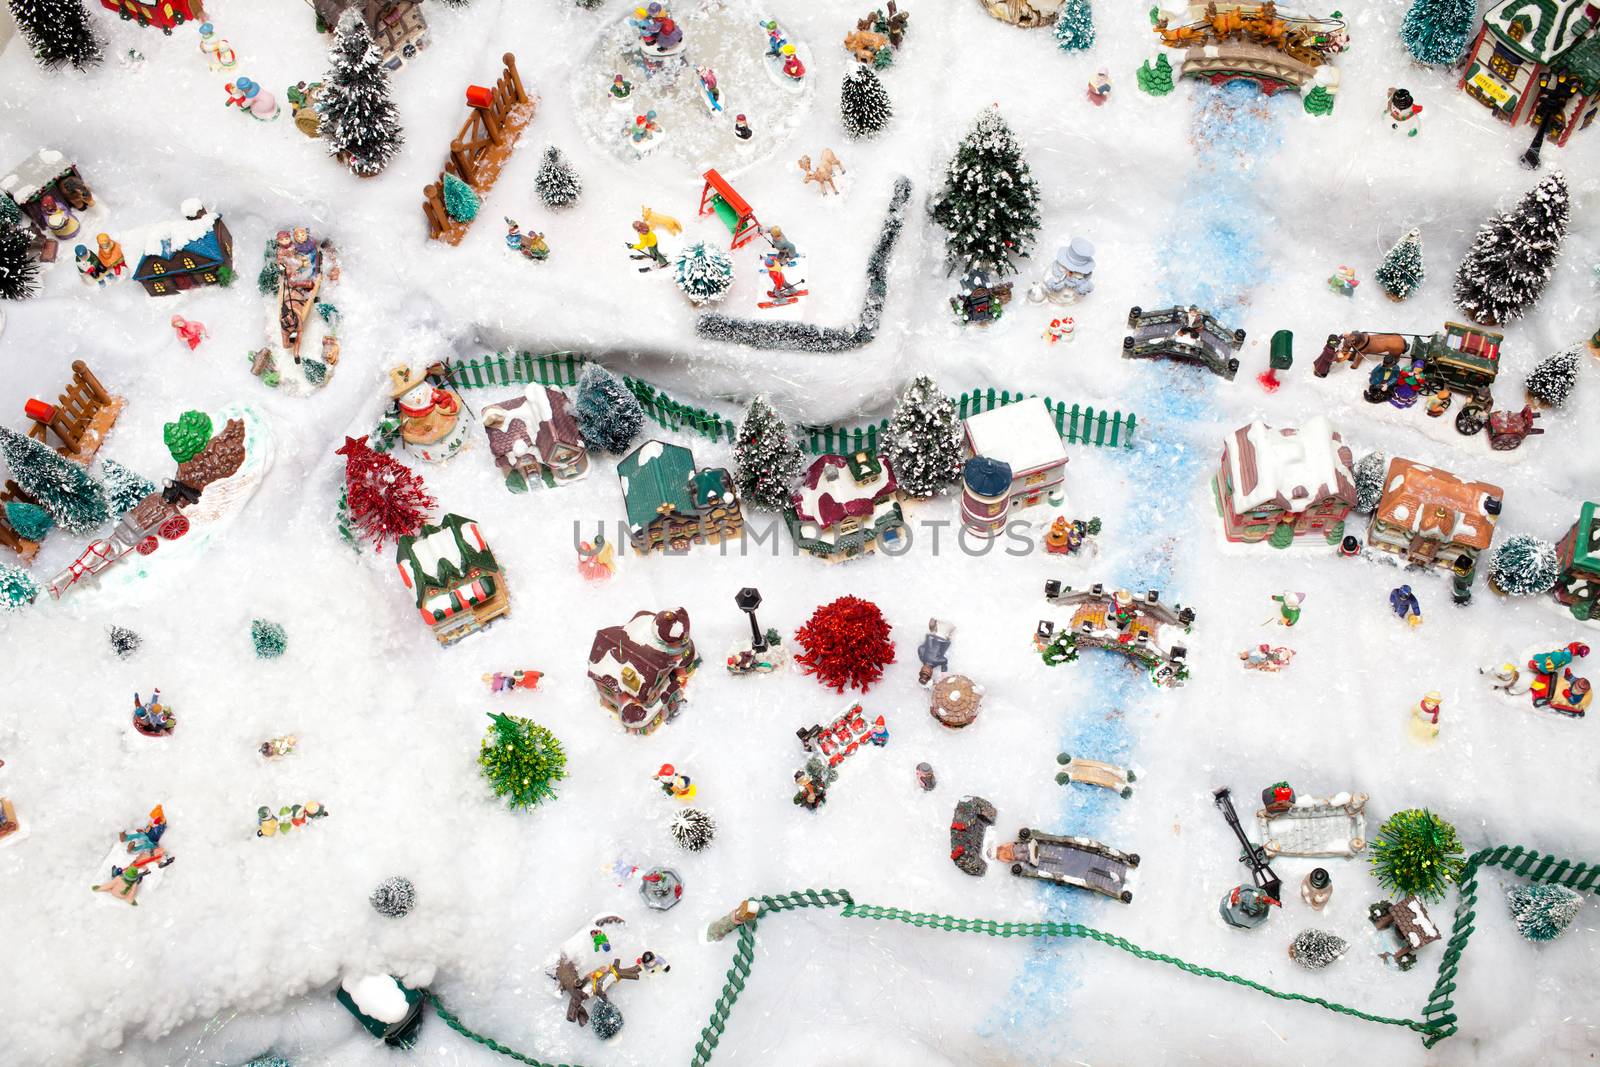 Miniature Christmas Village under Xmas Tree by aetb